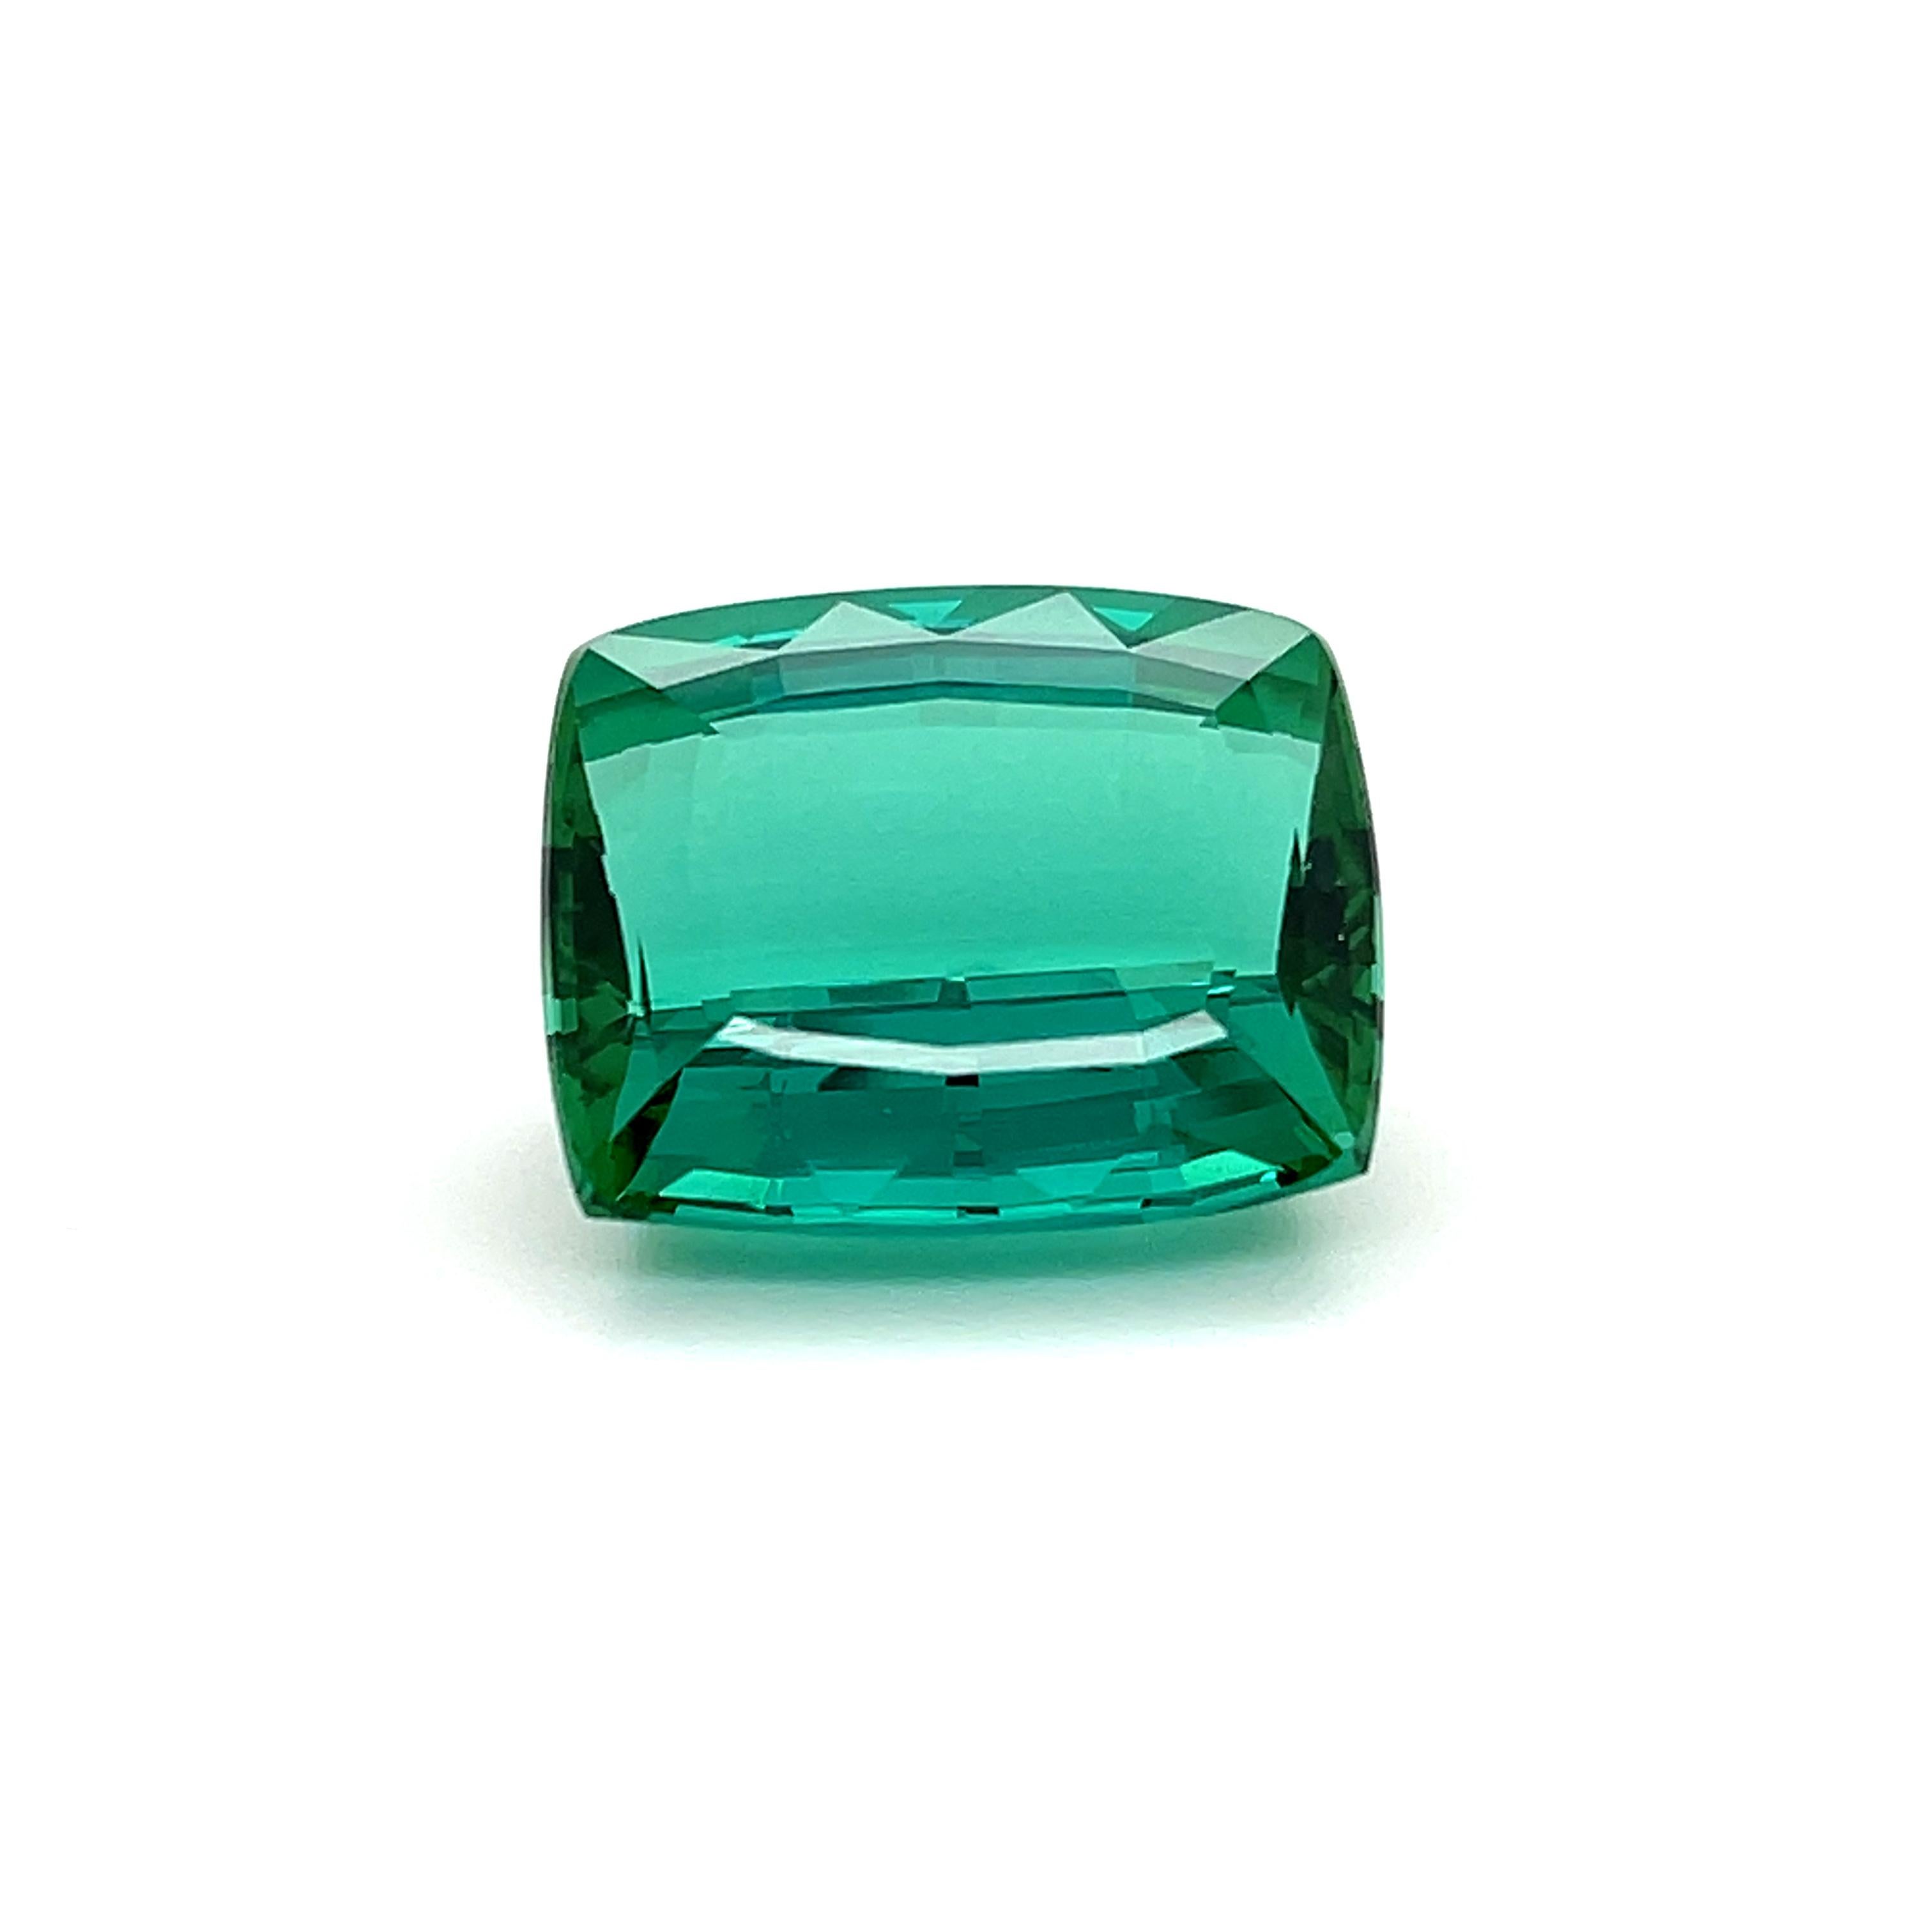 22.449ct Tourmaline Cushion step cut
Color: Bluish green
Provenance: Malacacheta, Minas Gerais, Brazil
Dimensions: 18,2 x 15,6 x 9,65 mm
Clarity: Flawless